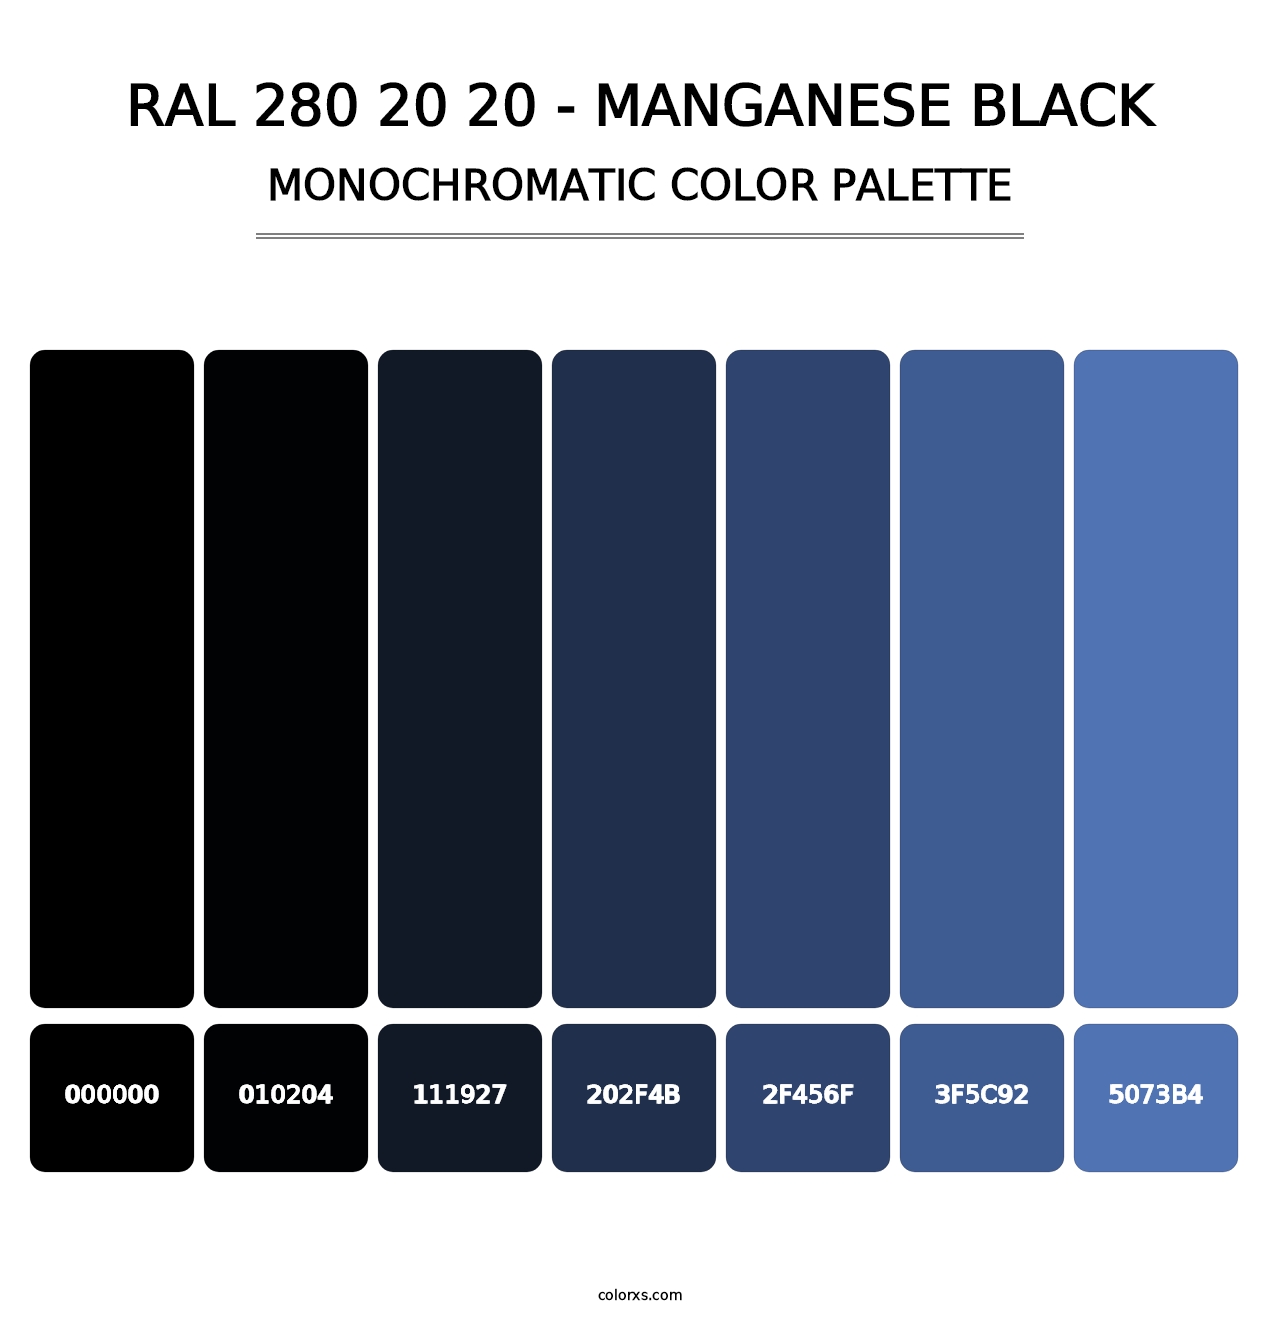 RAL 280 20 20 - Manganese Black - Monochromatic Color Palette